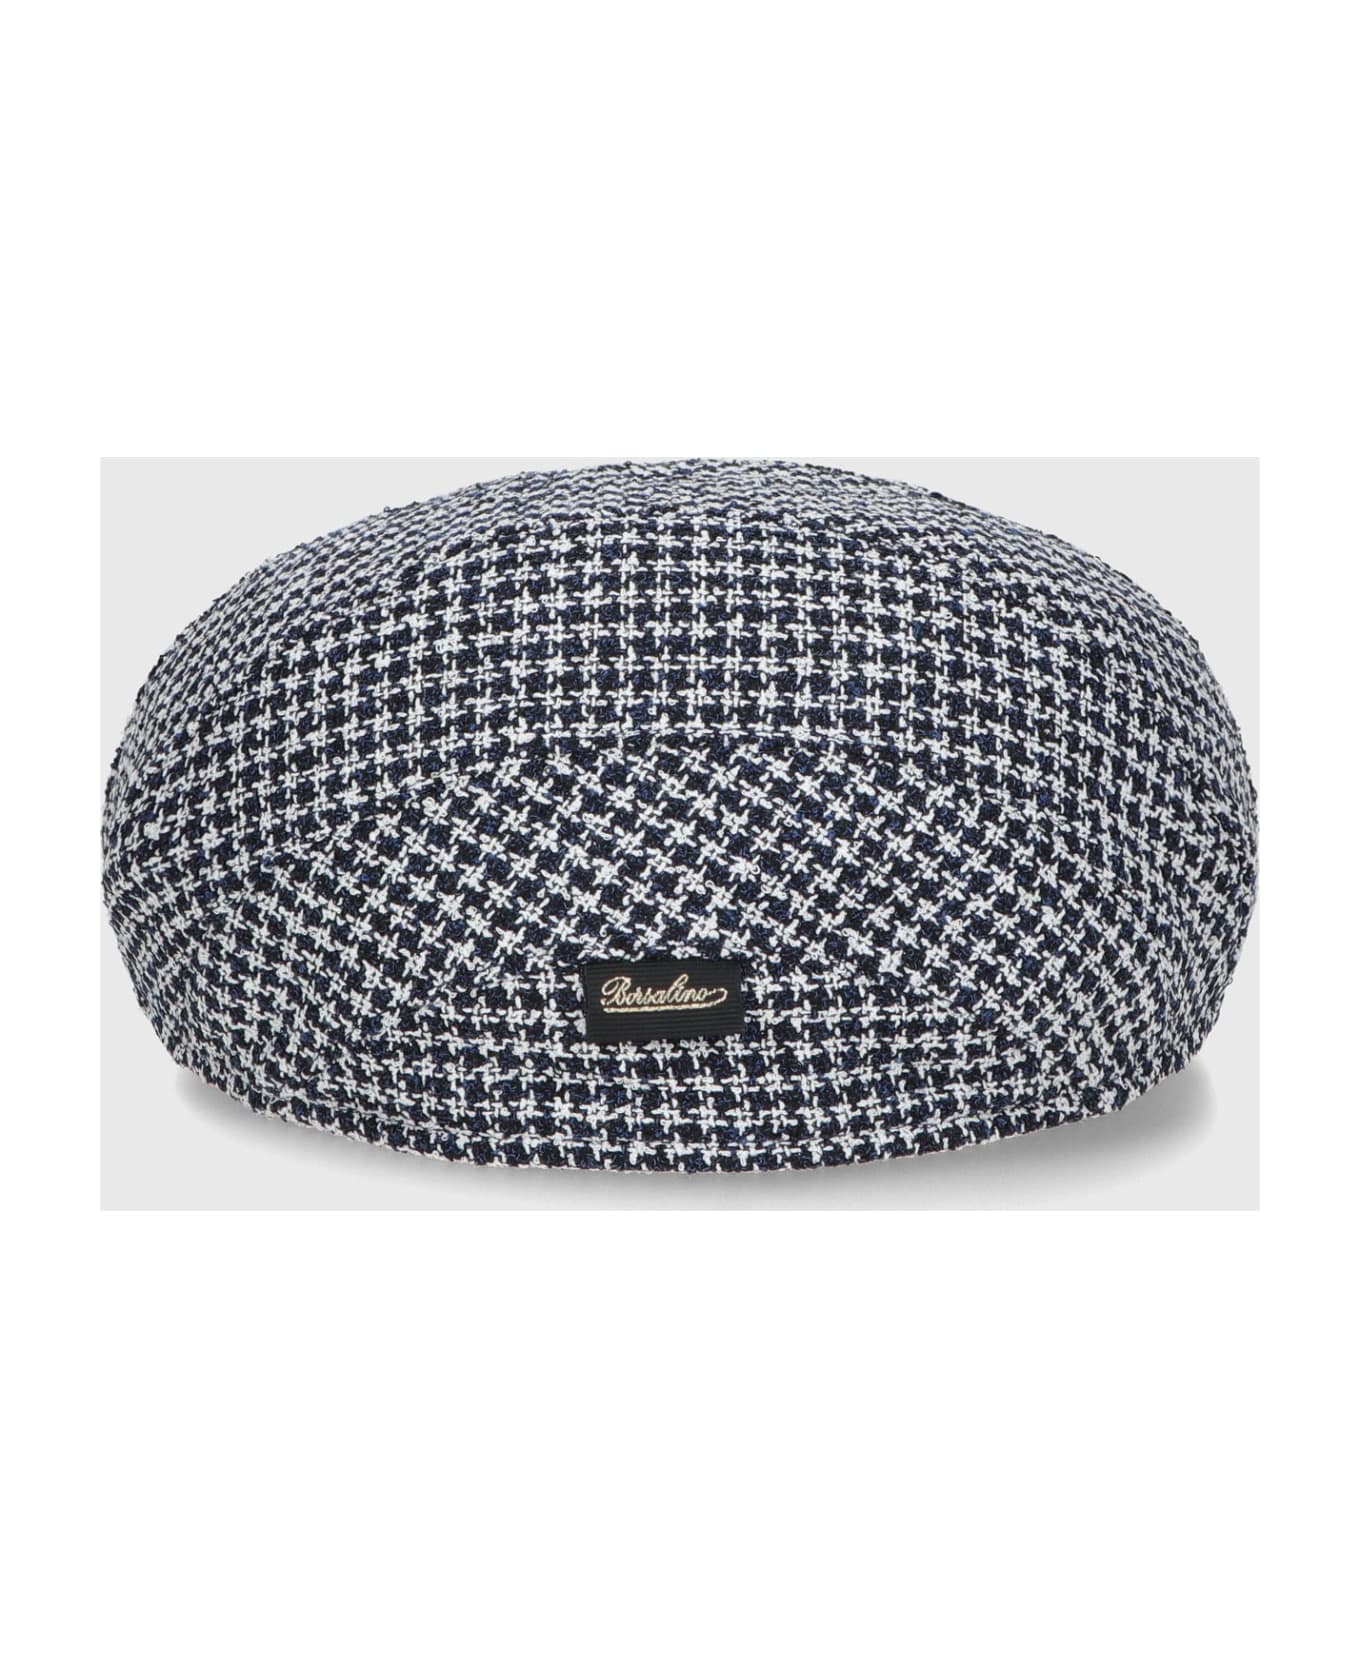 Borsalino Vincenzo Soft Flat Cap - HOUNDSTOOTH NAVY BLUE/WHITE 帽子